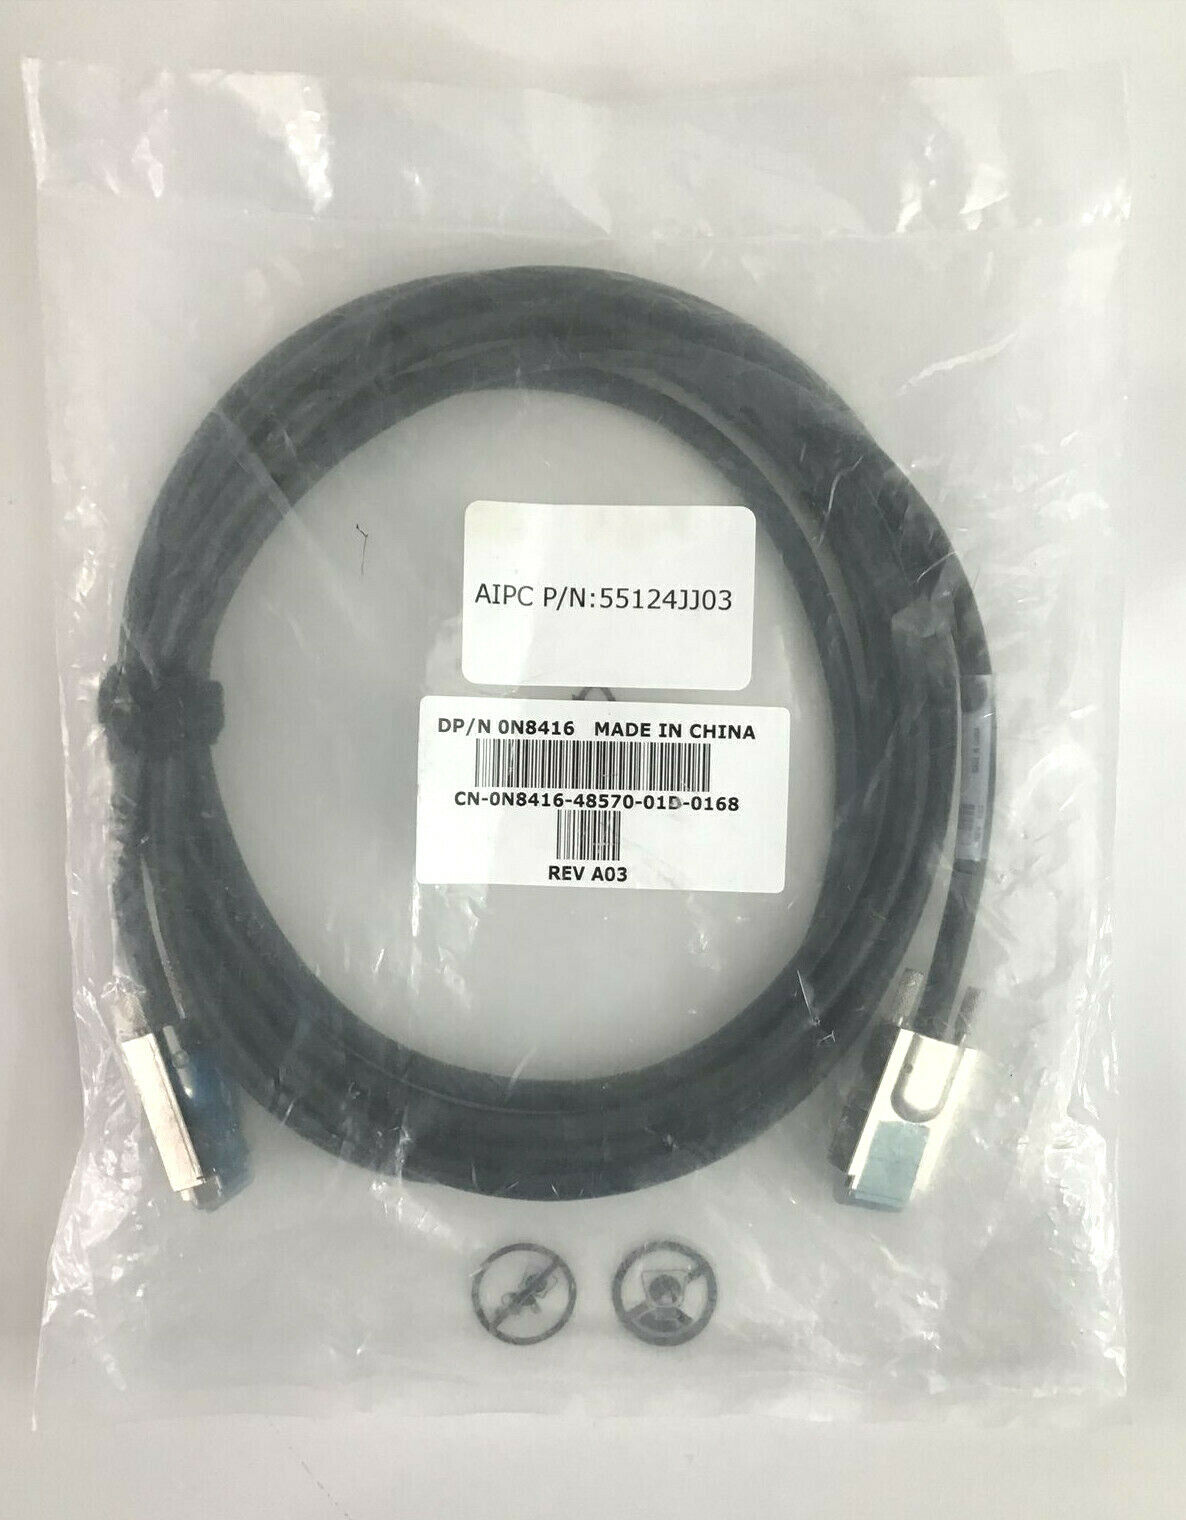 Dell Amphenol External SCSI SAS Cable (D/N: 0N8416)